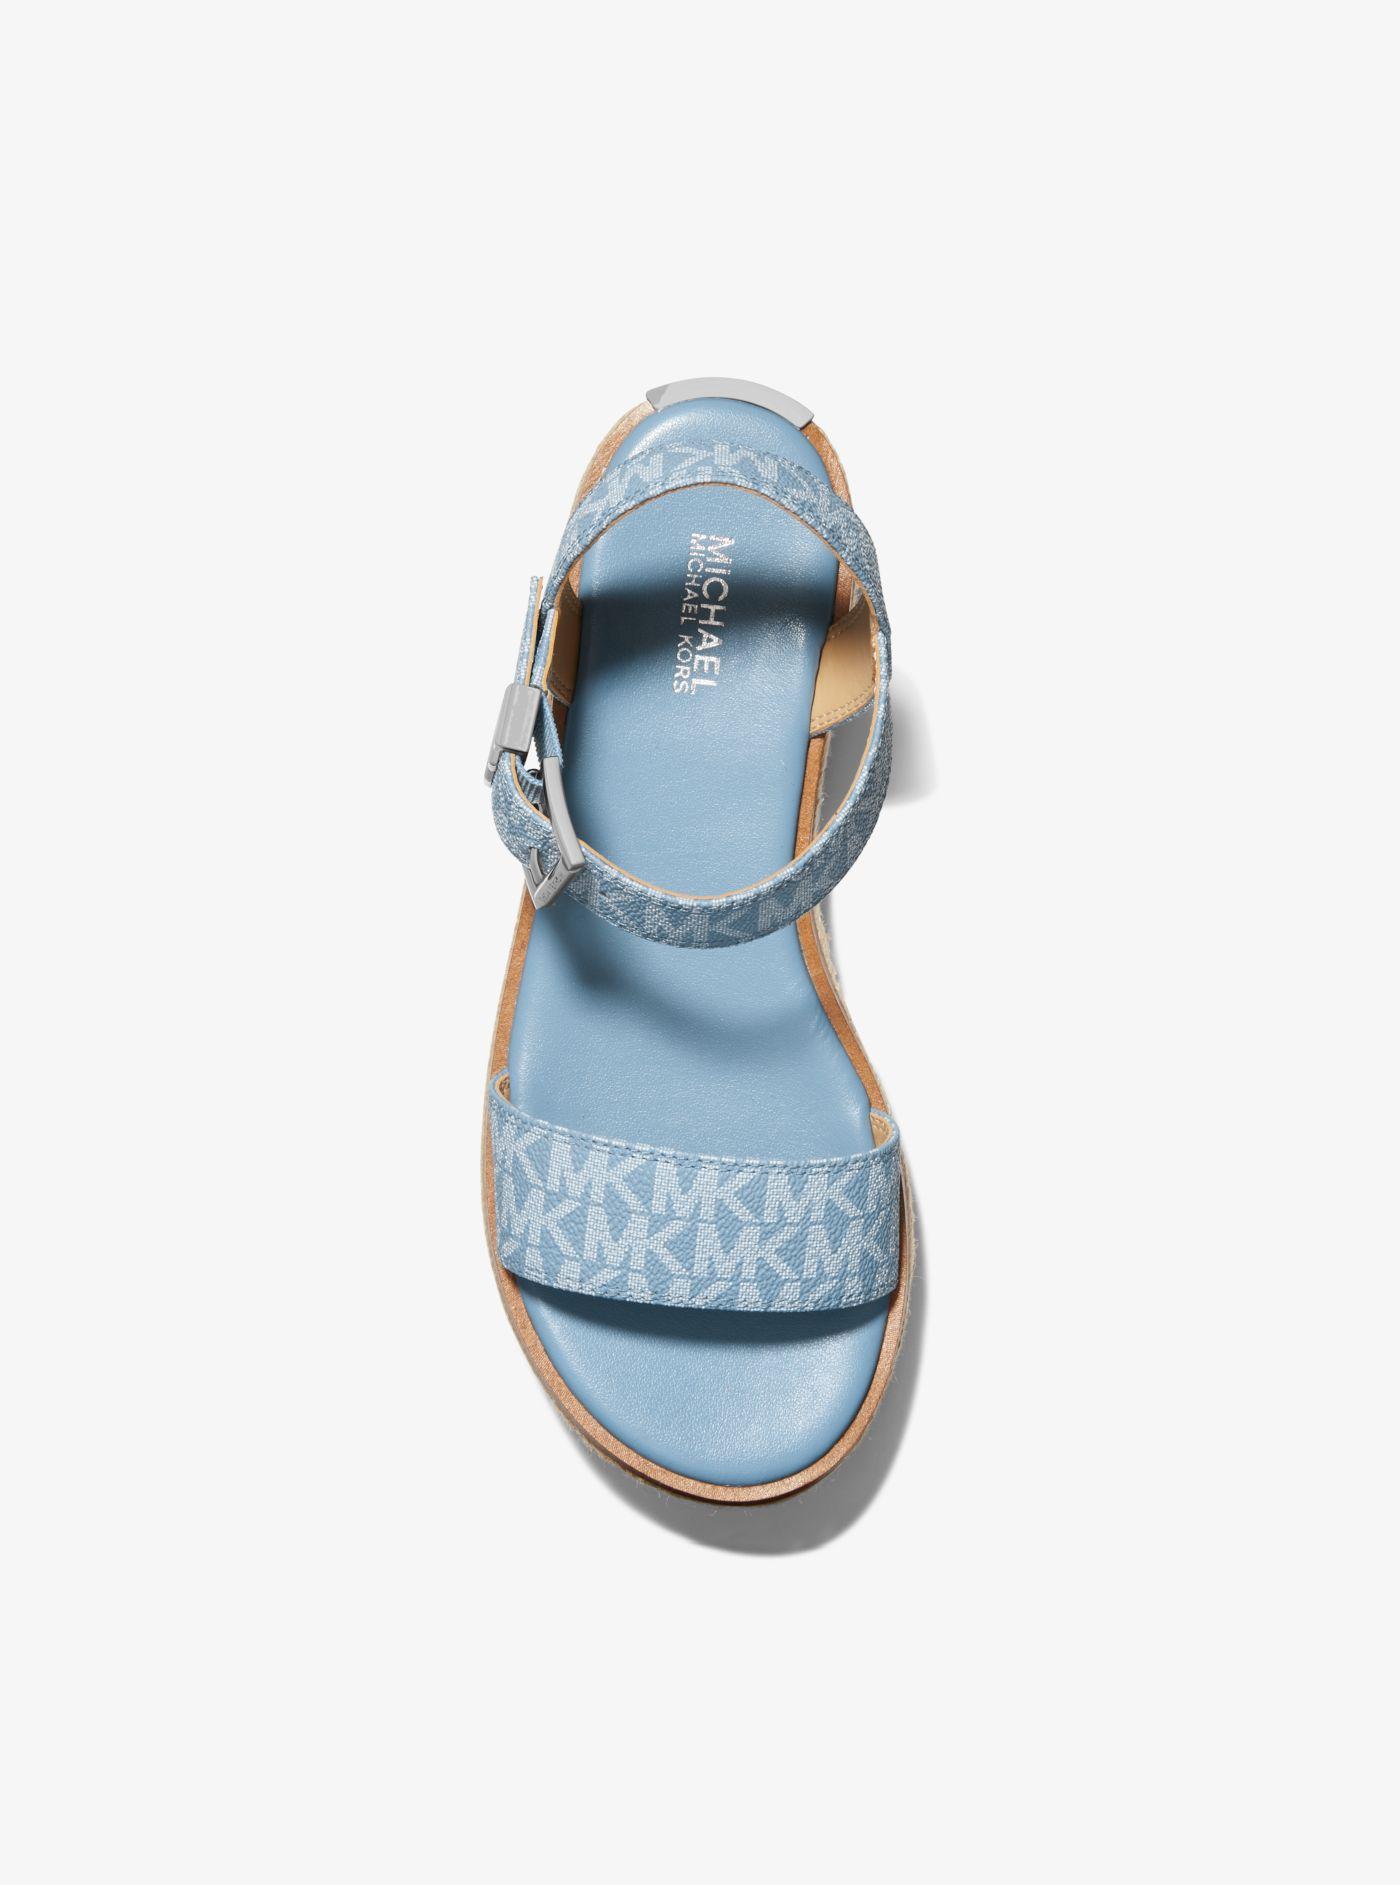 Michael Kors Richie Logo Platform Espadrille Sandal in Blue | Lyst